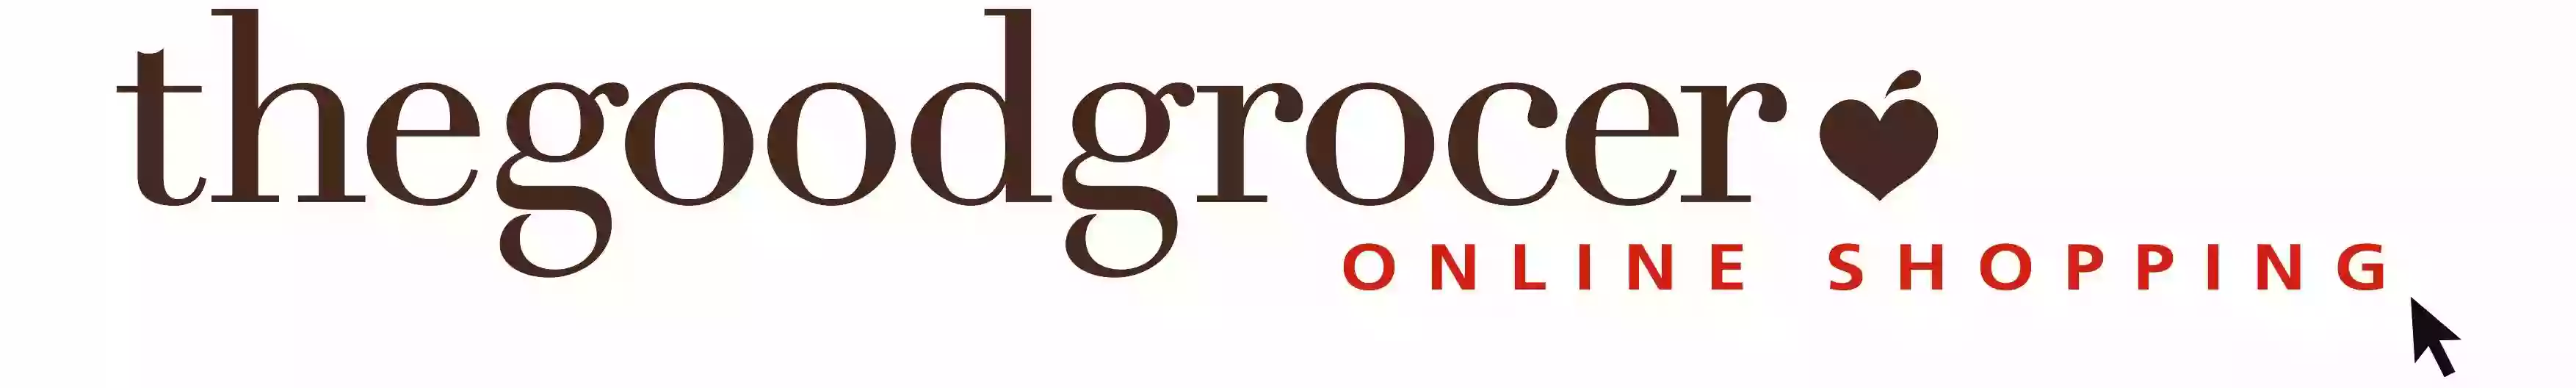 The Good Grocer Applecross IGA